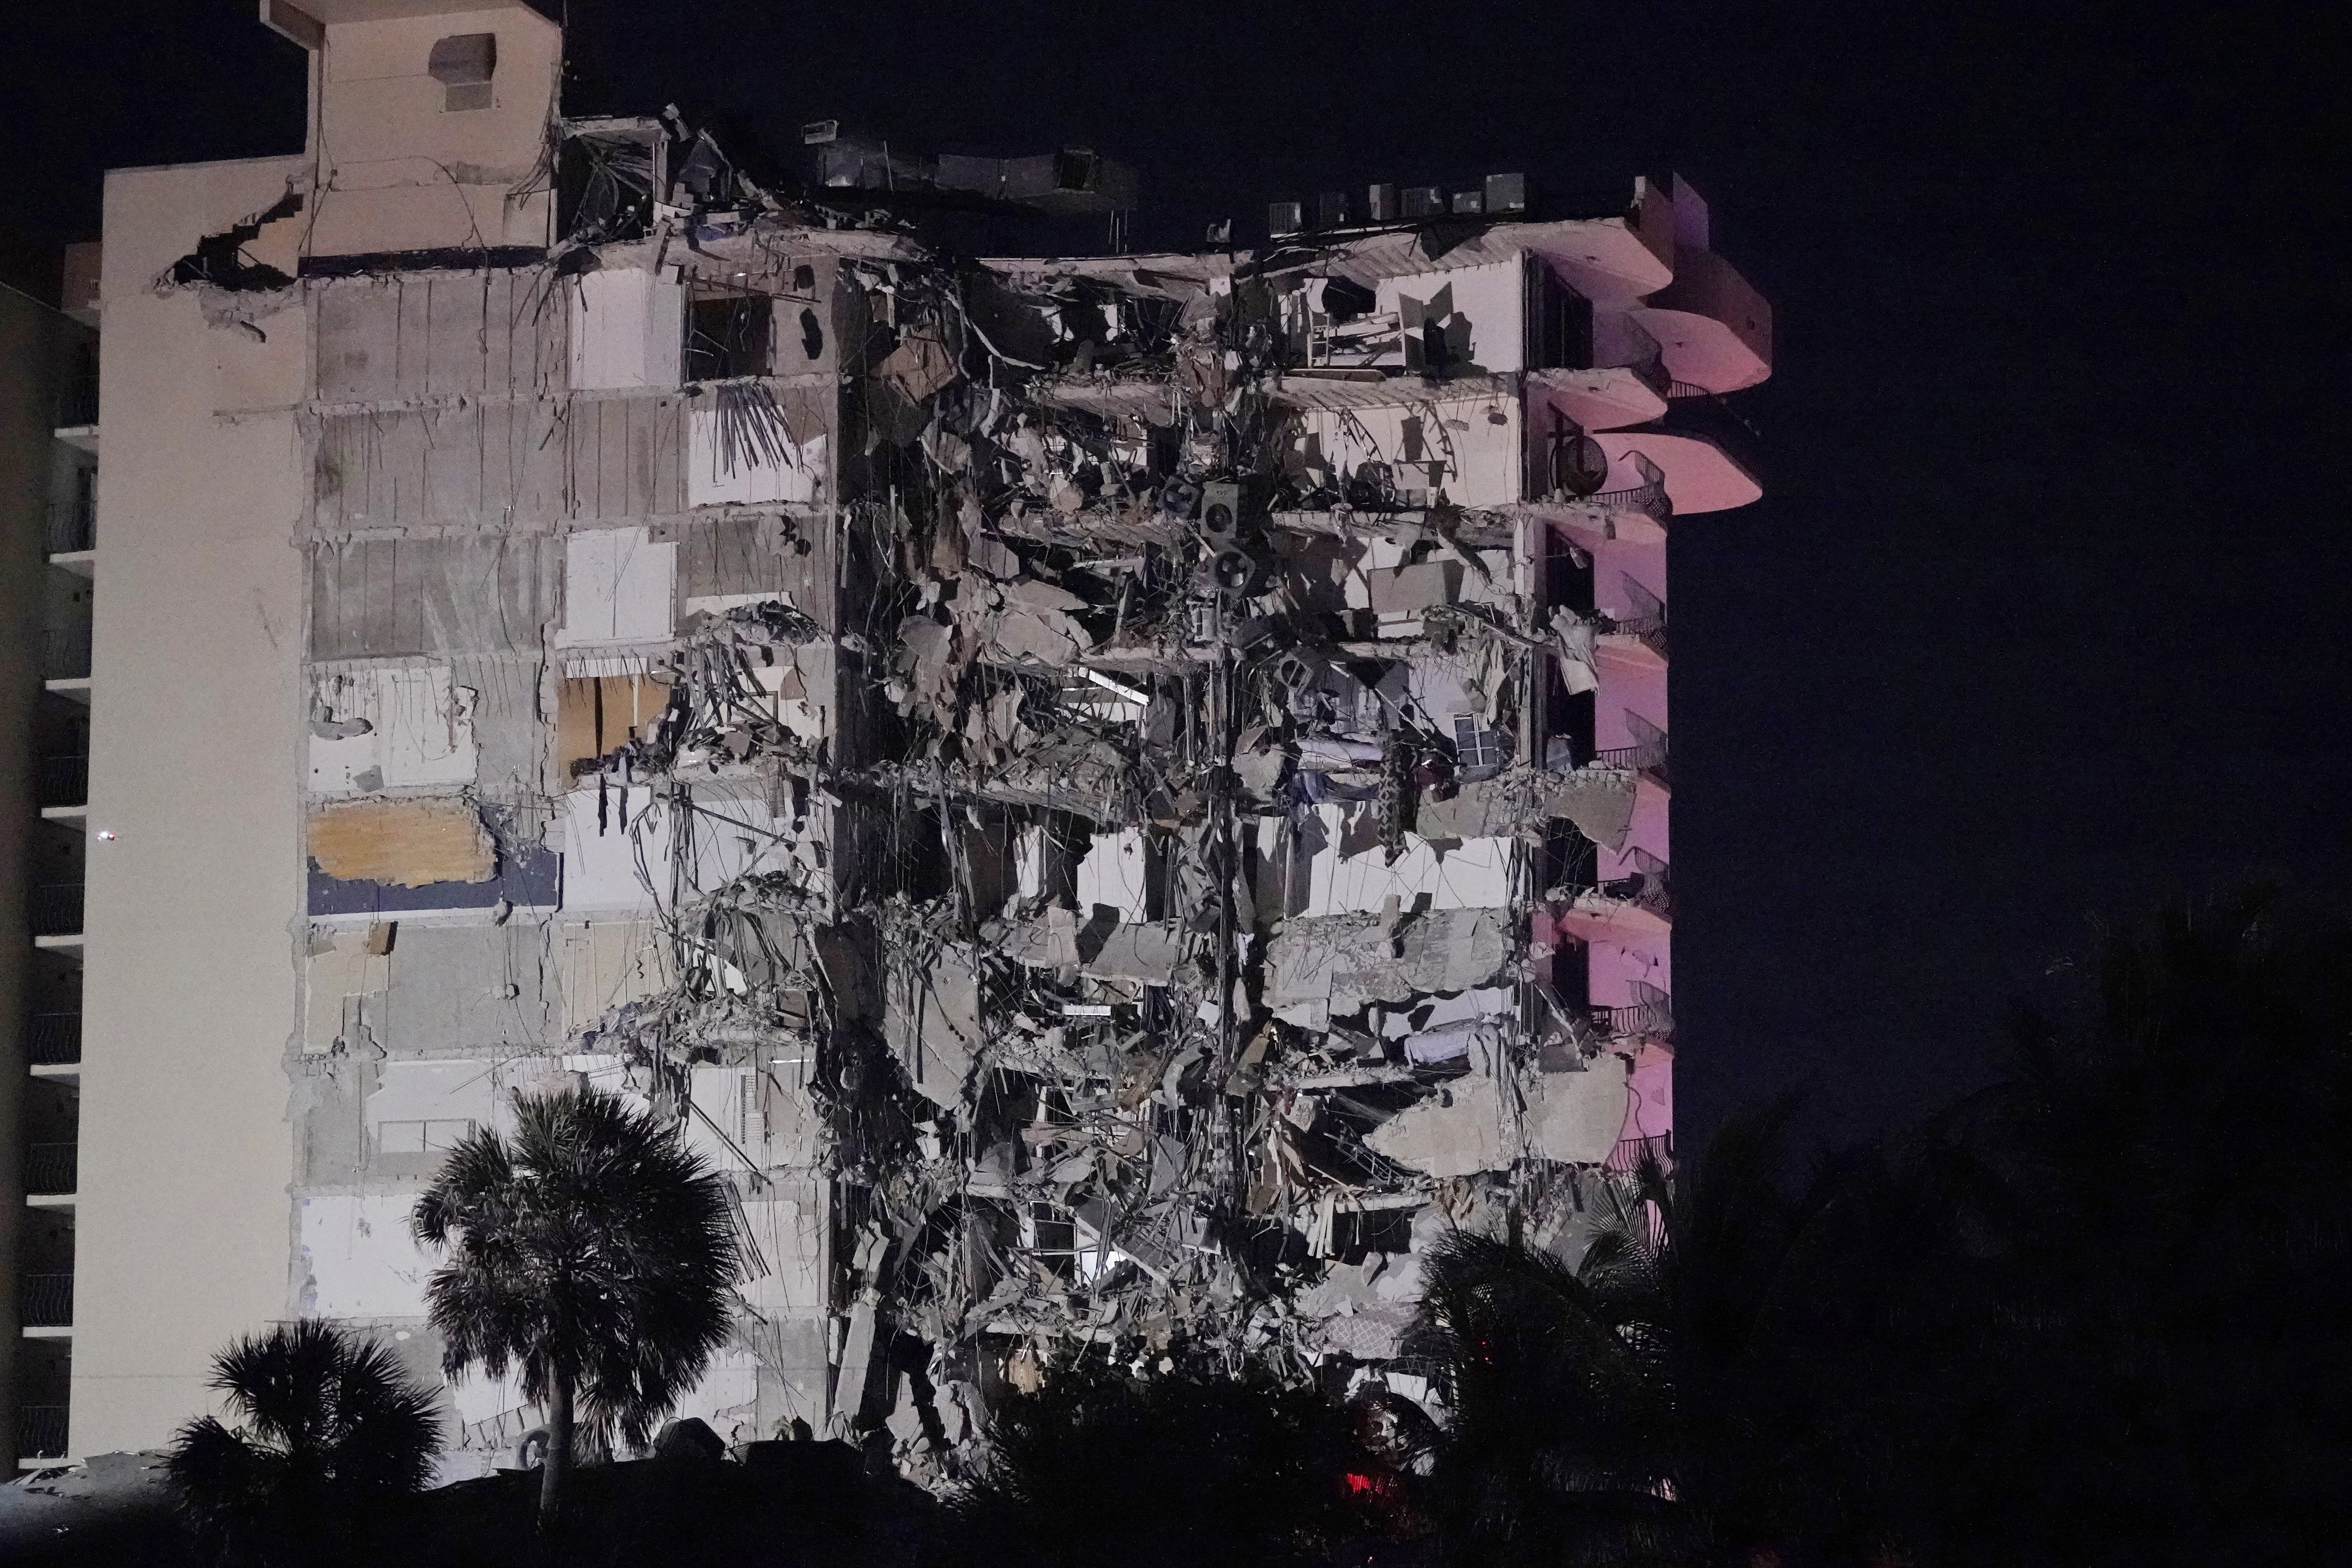 Miami building collapse